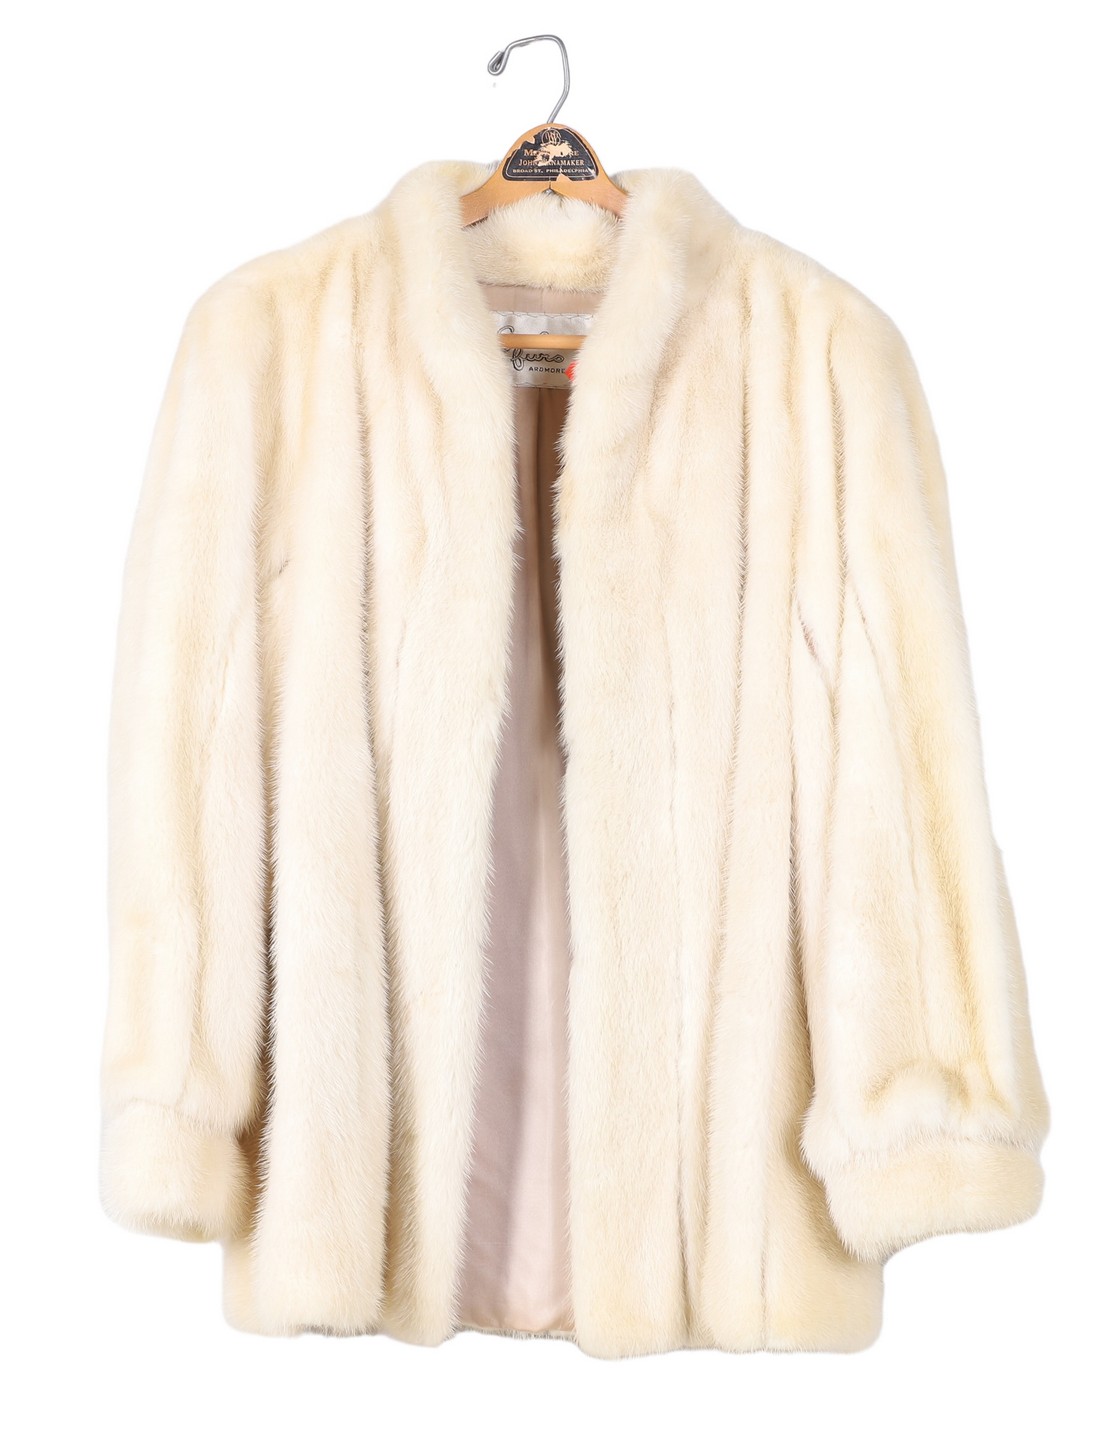 Gaylon Furs cream mink coat silk 317de5